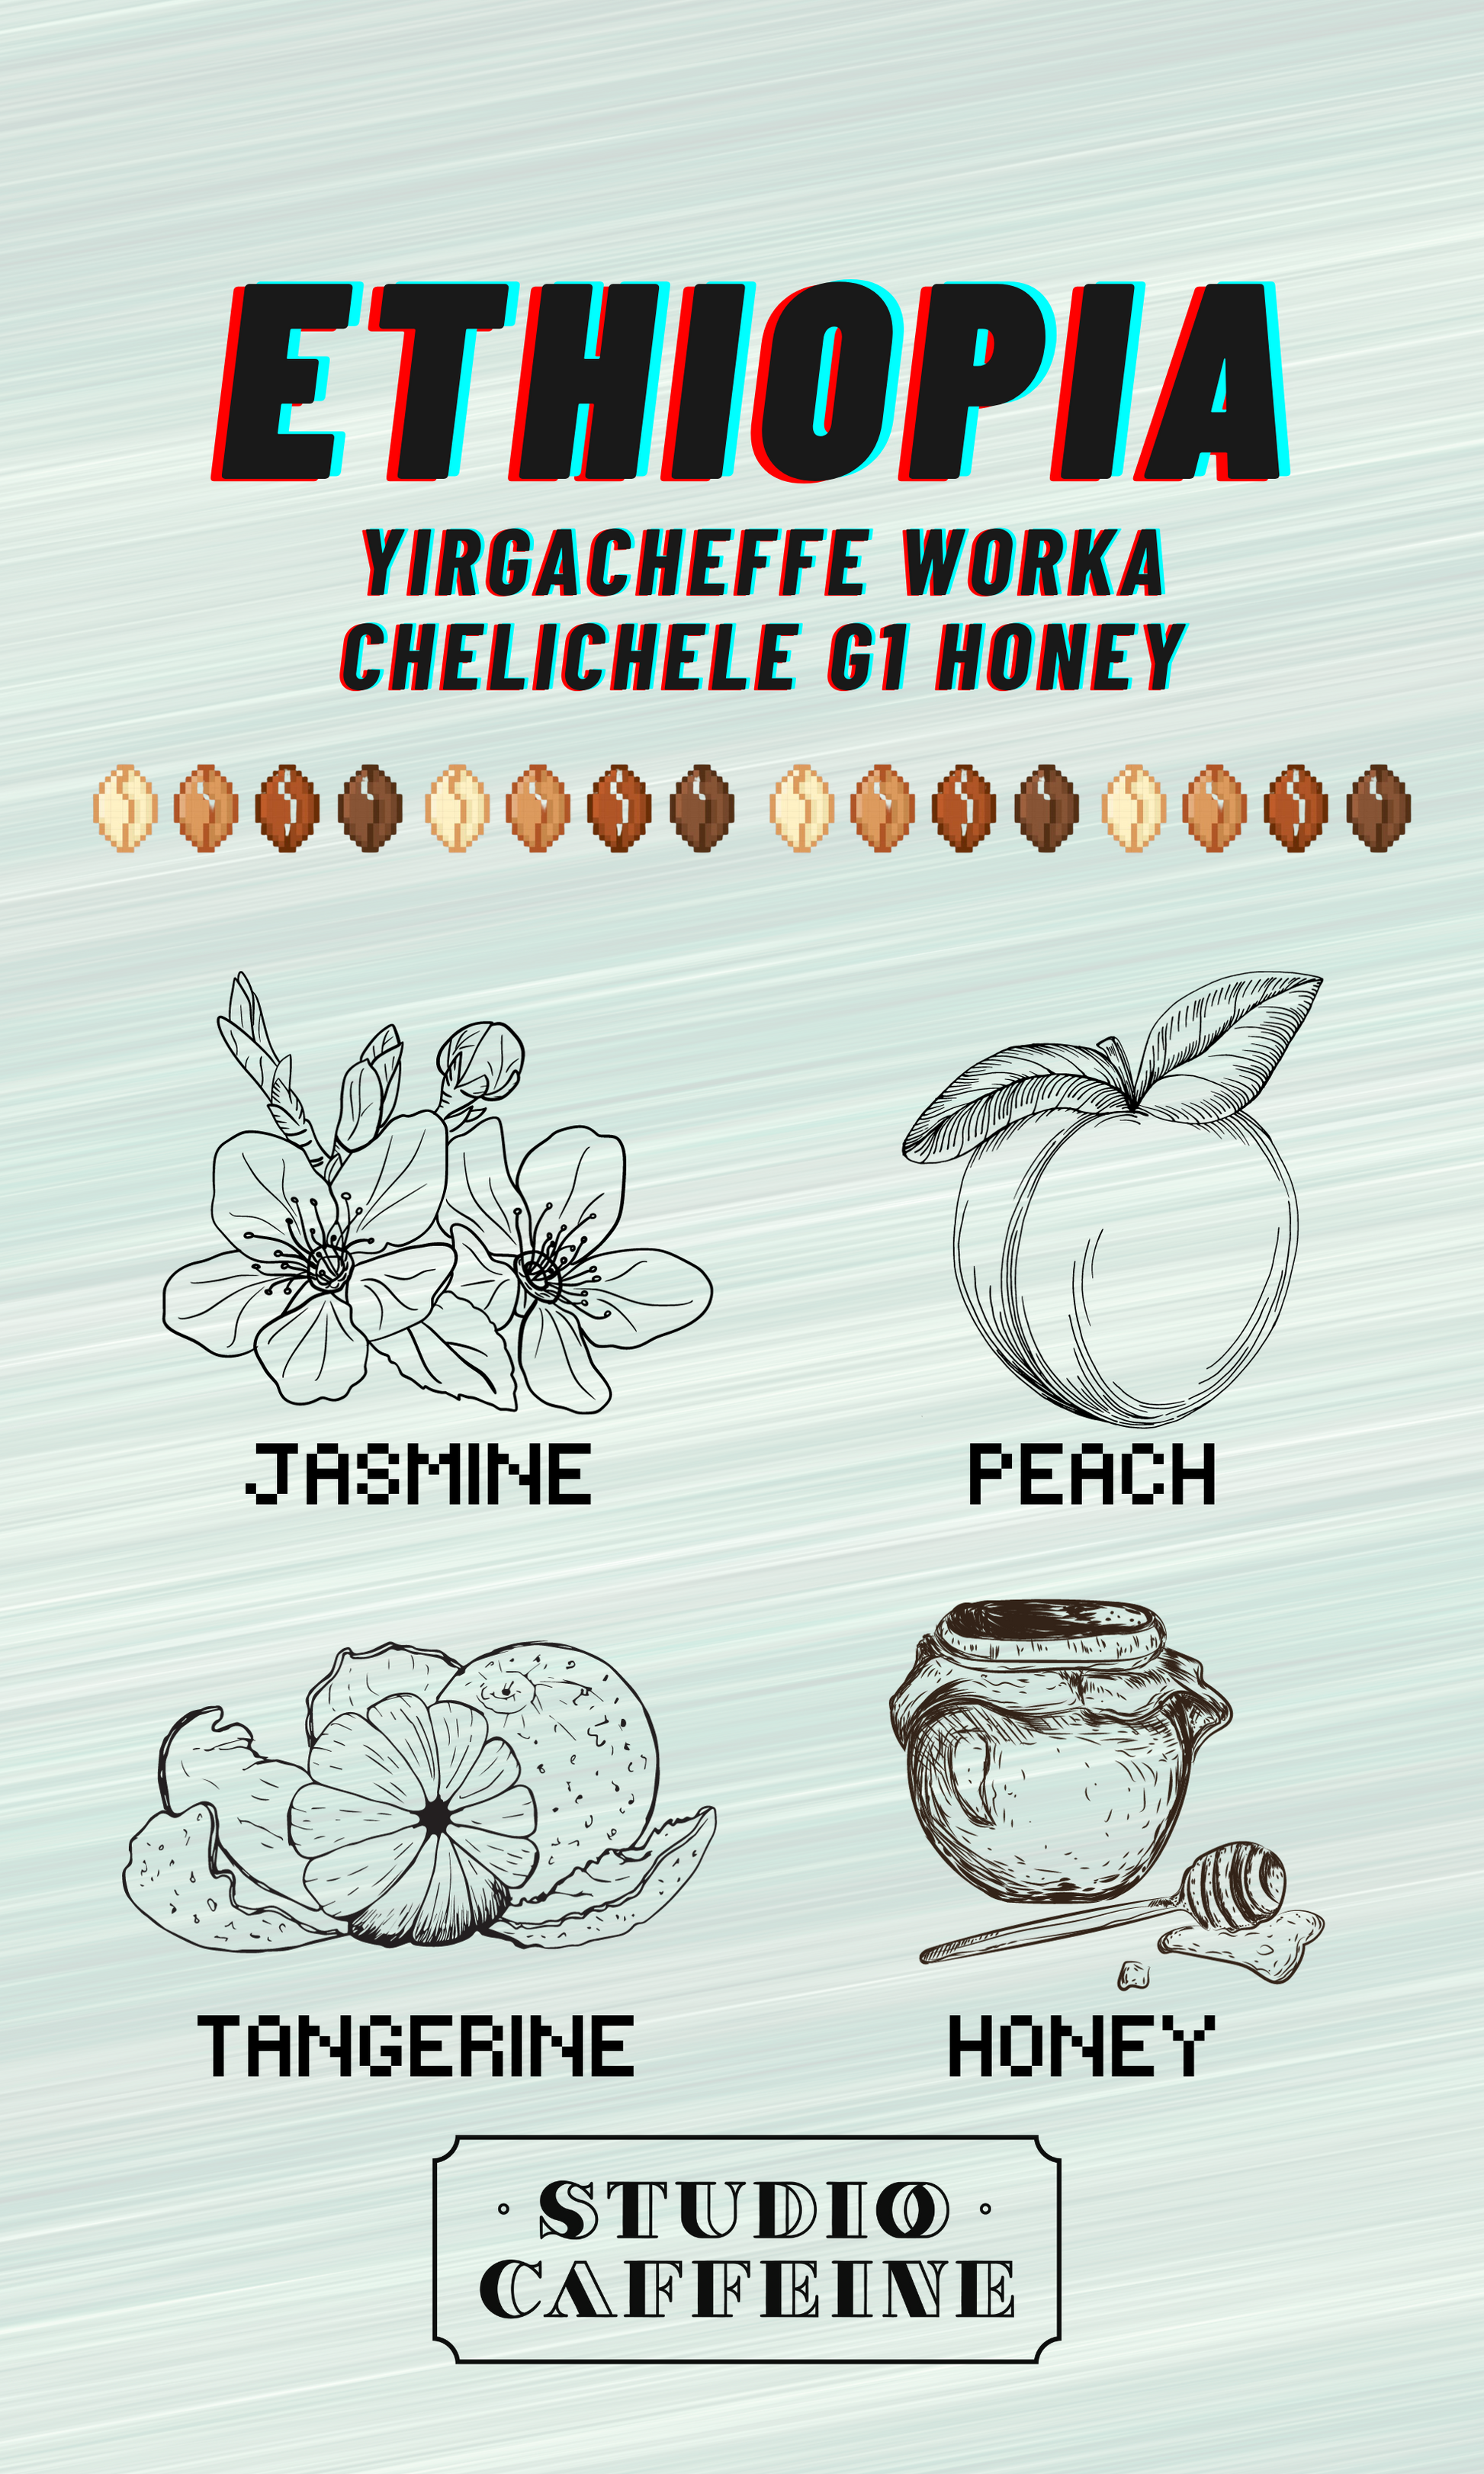 Ethiopia Yirgacheffe Worka Chelichele G1 Honey coffee bean fresh roasted by Studio Caffeine